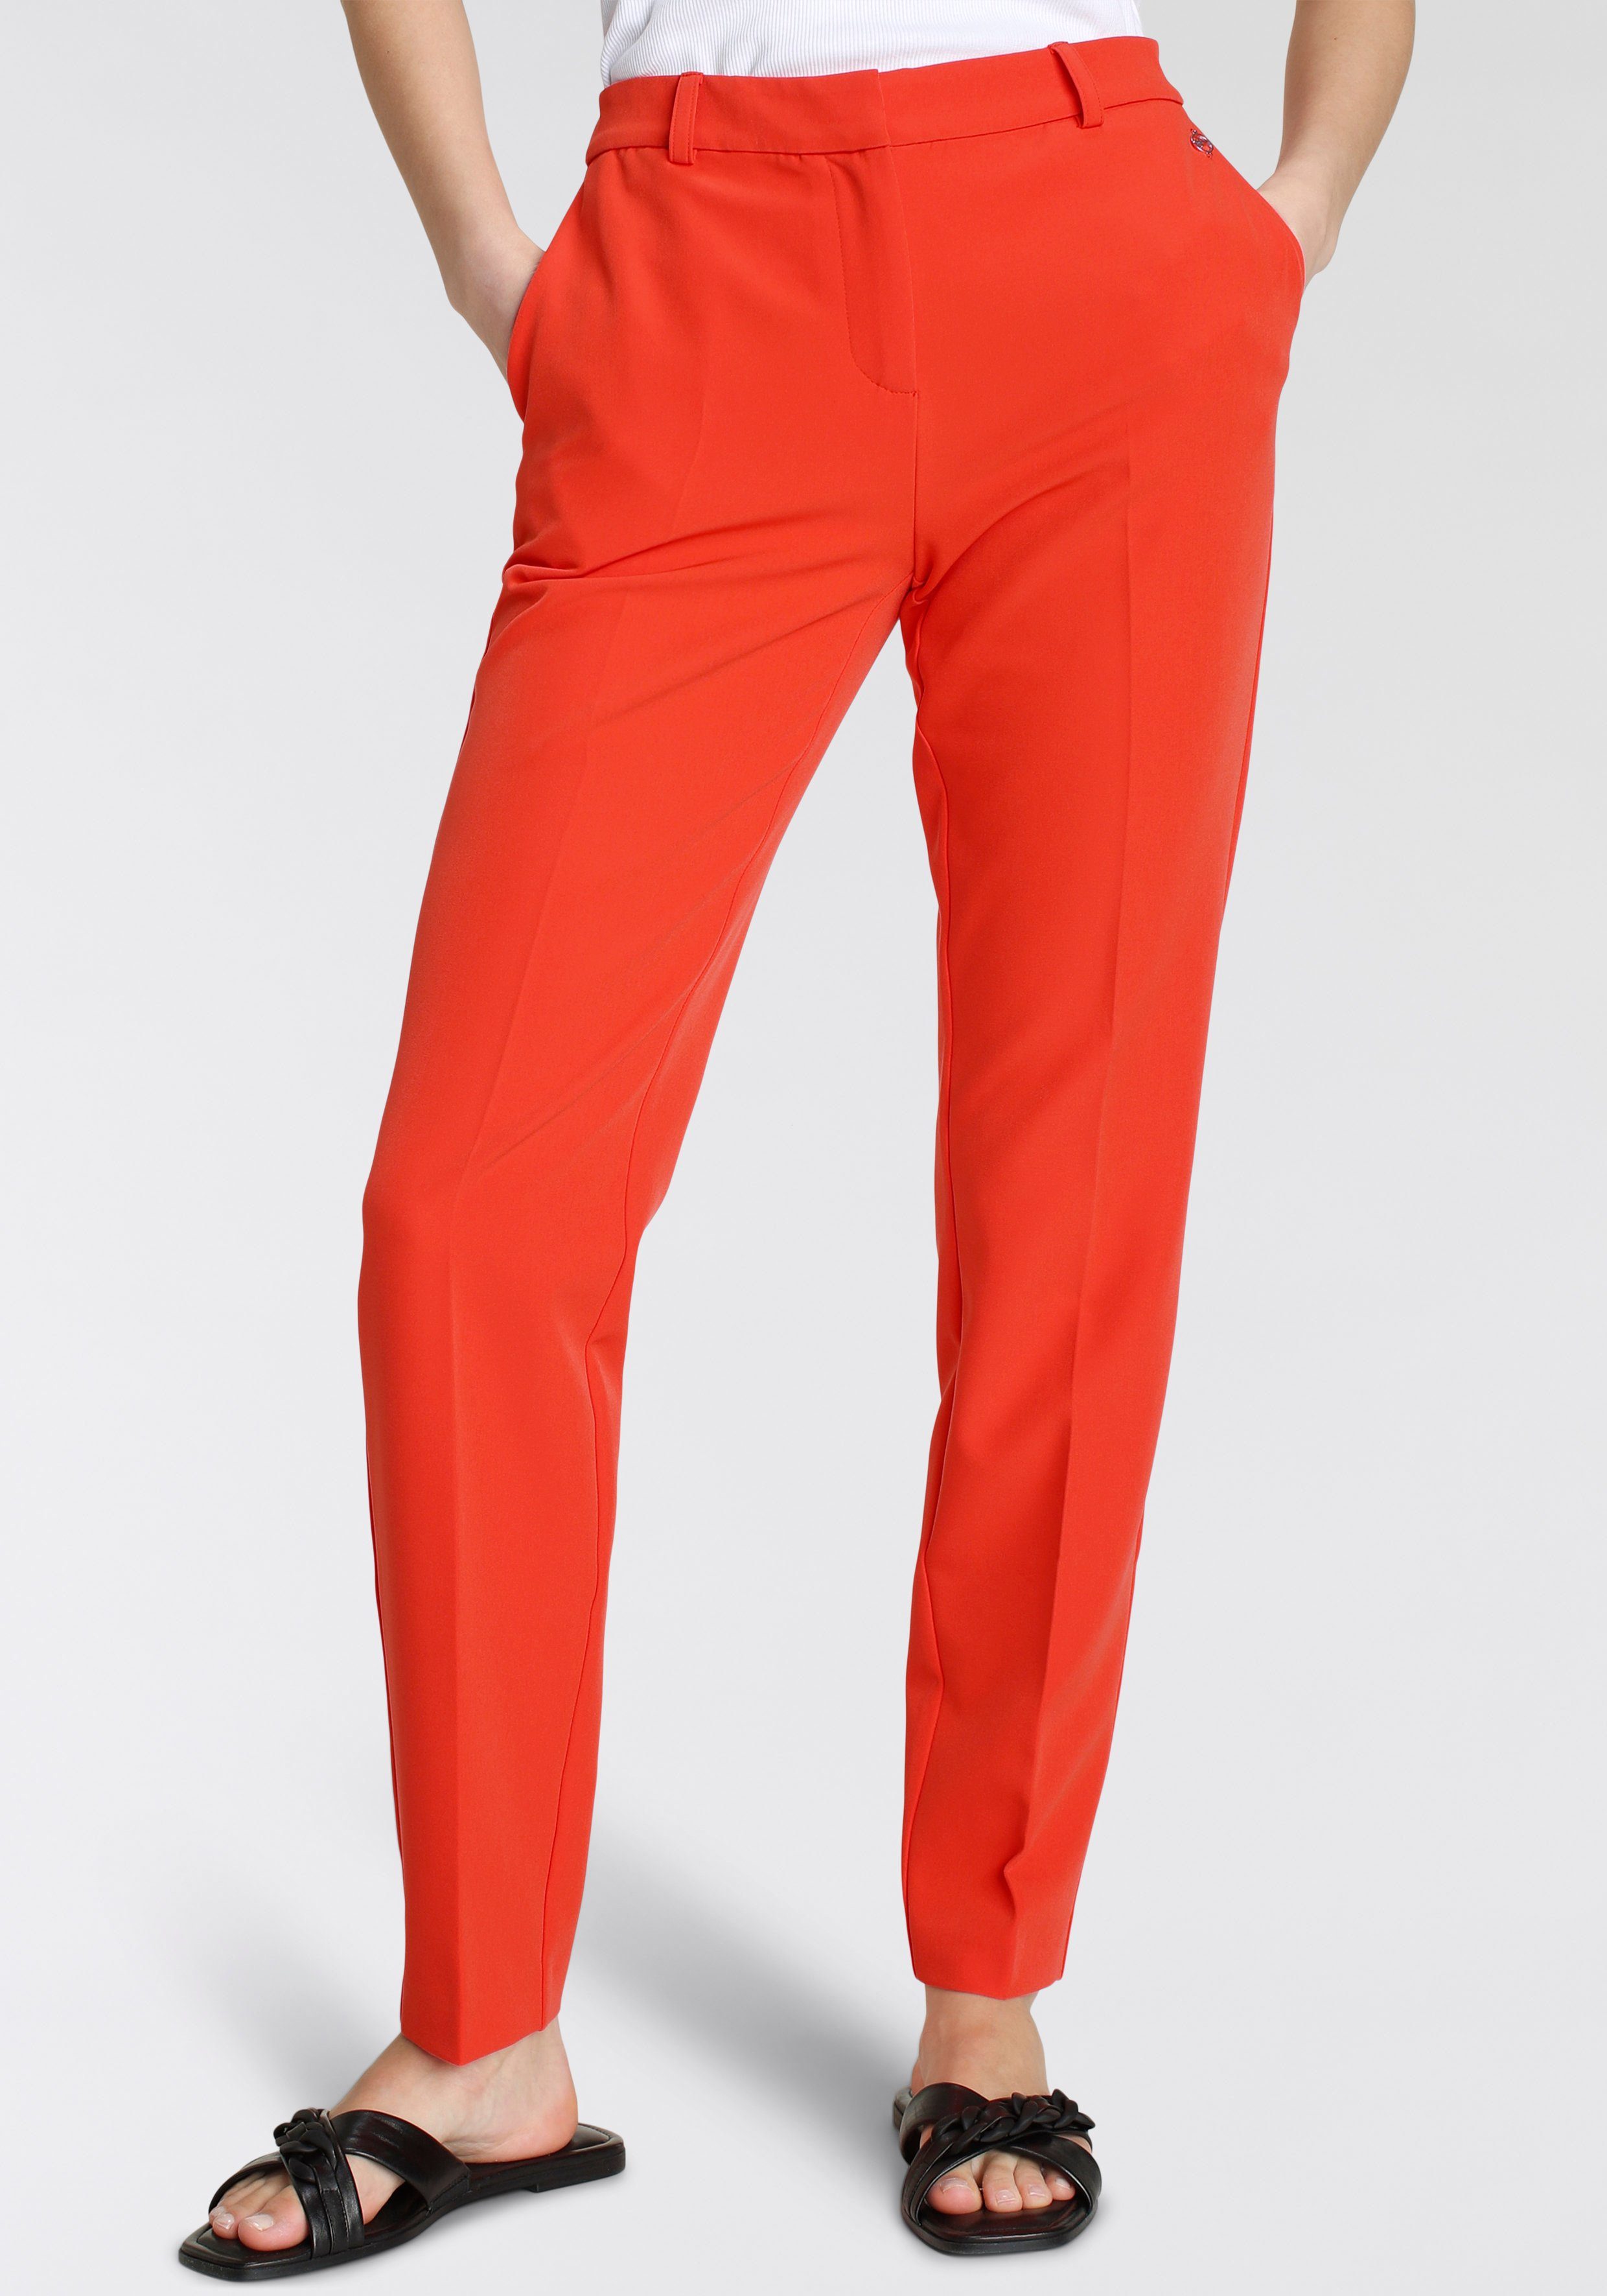 Anzughose Material) in Trendfarben Tamaris (Hose aus orange nachhaltigem